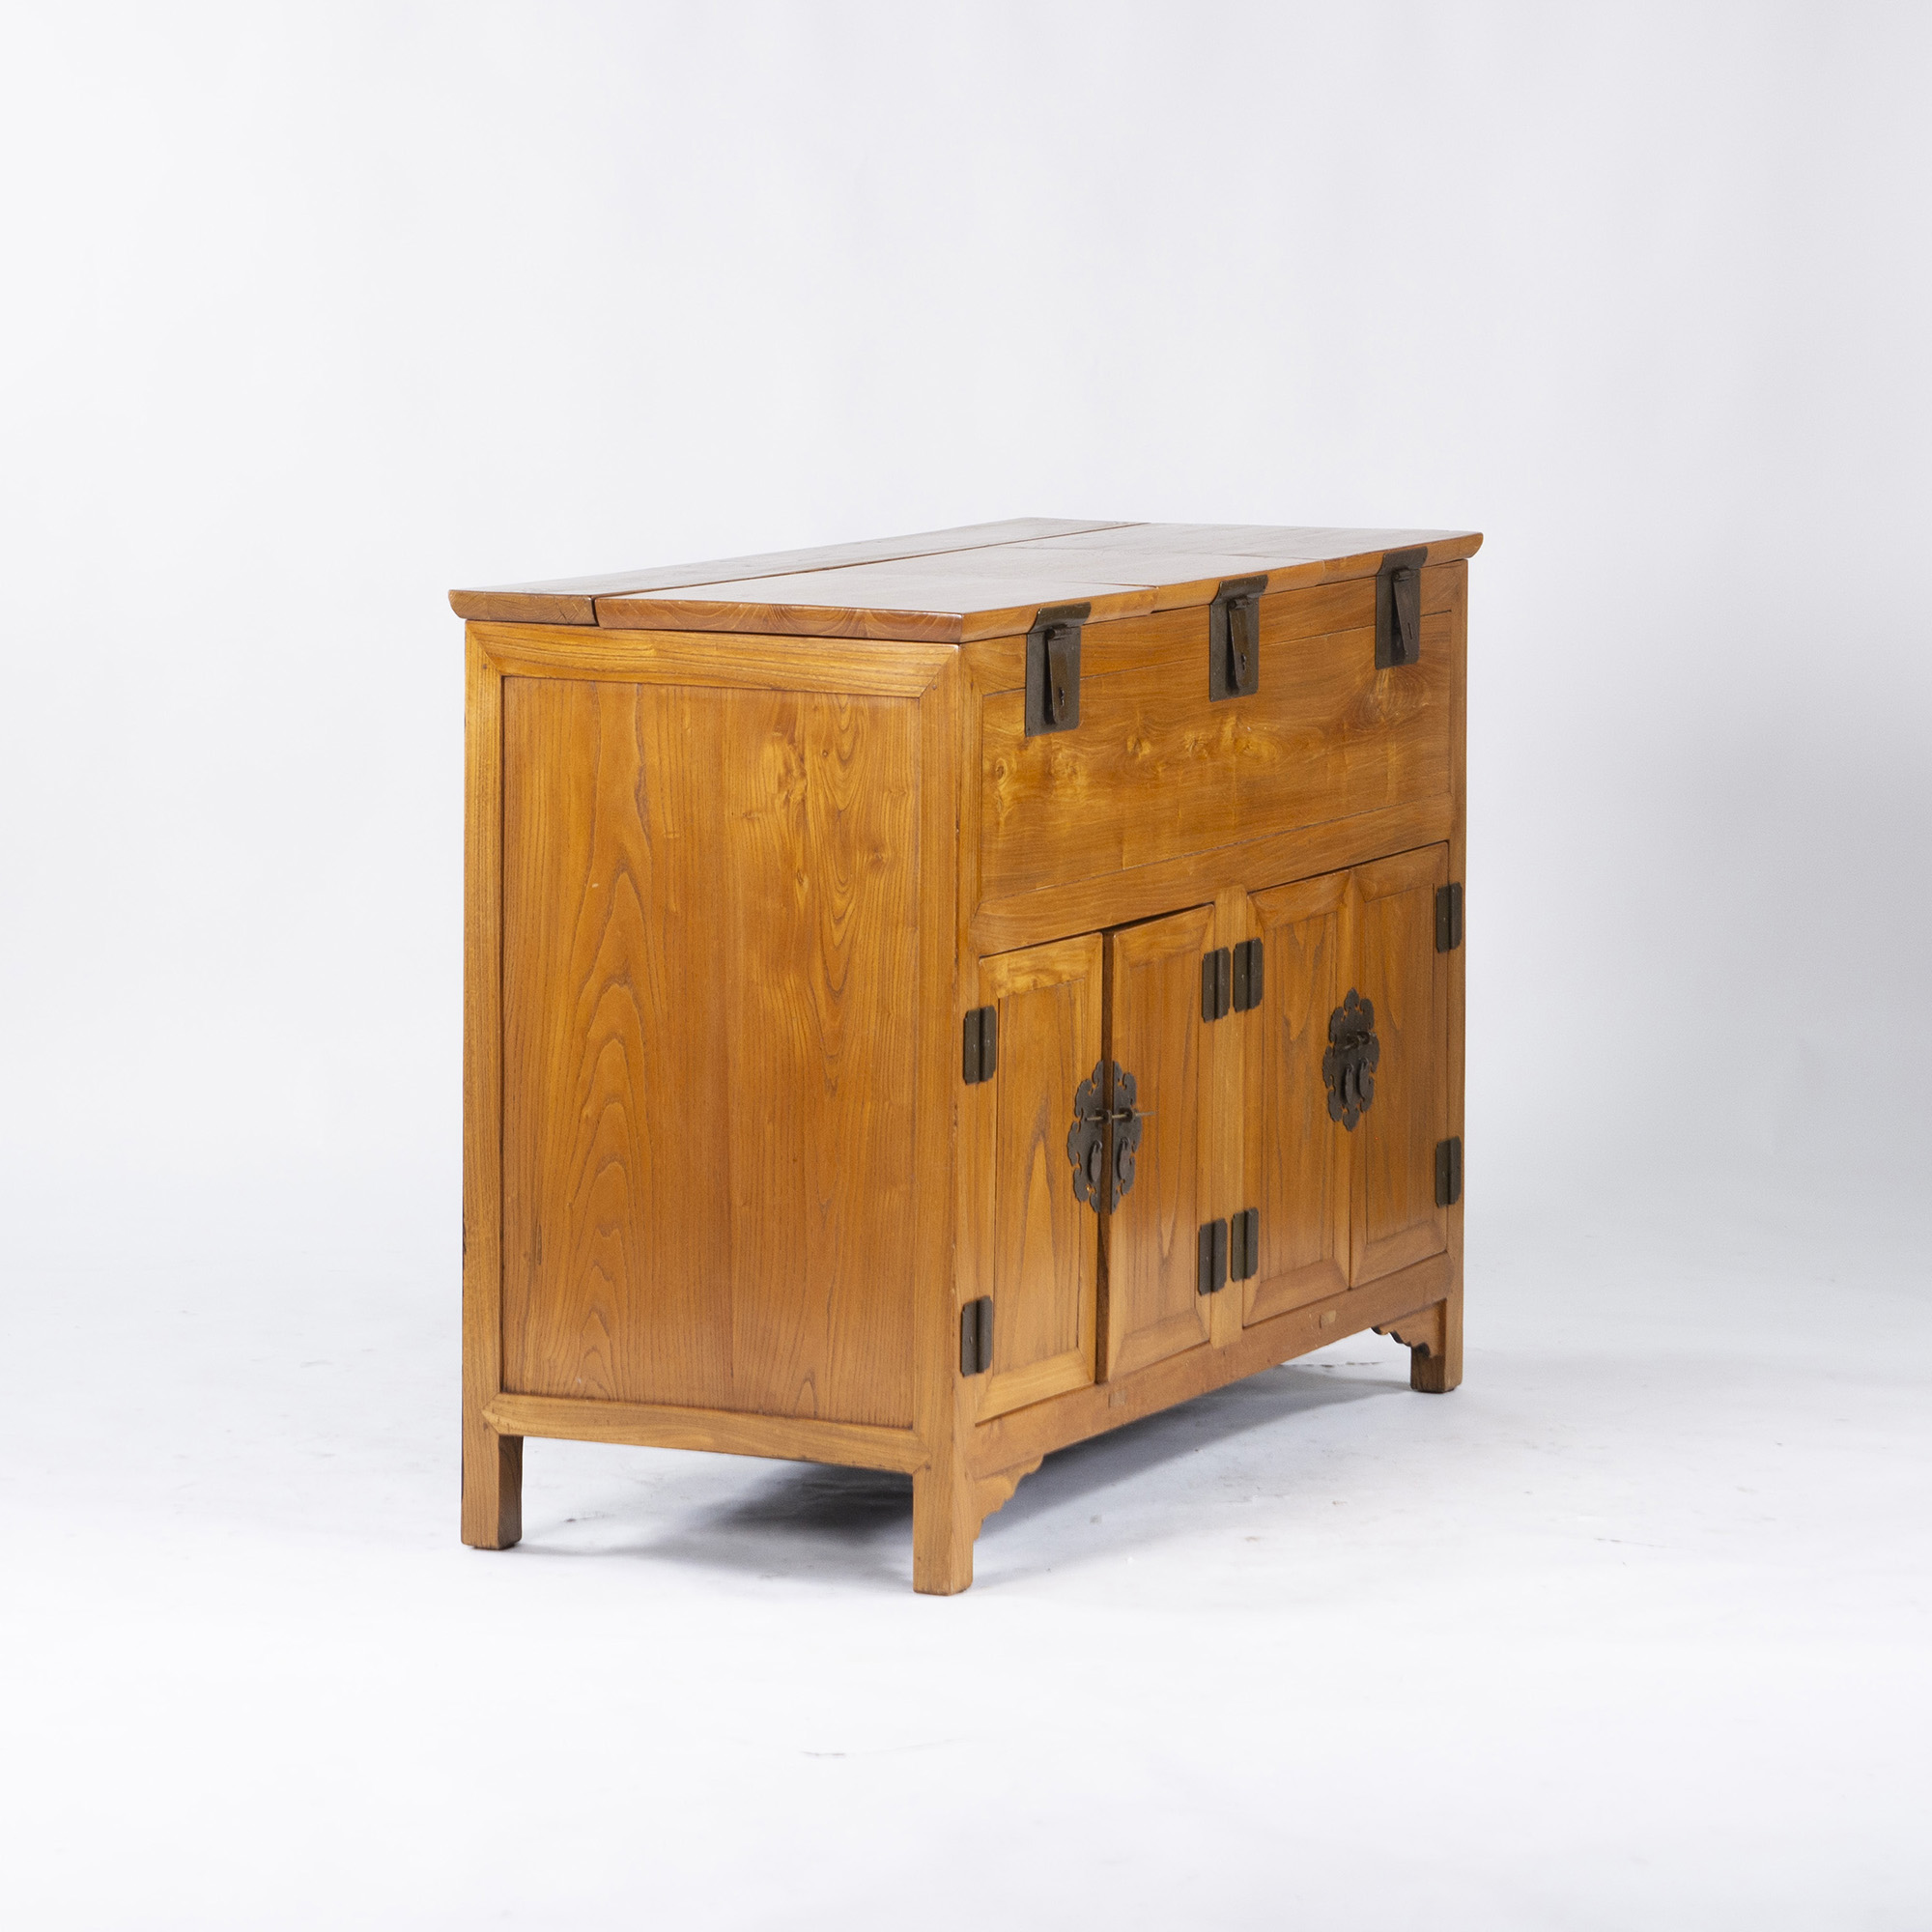  Vintage sideboard Joseon Dynasty furniture van daji storage furniture living storage chest olientaru natural wood antique old tool 